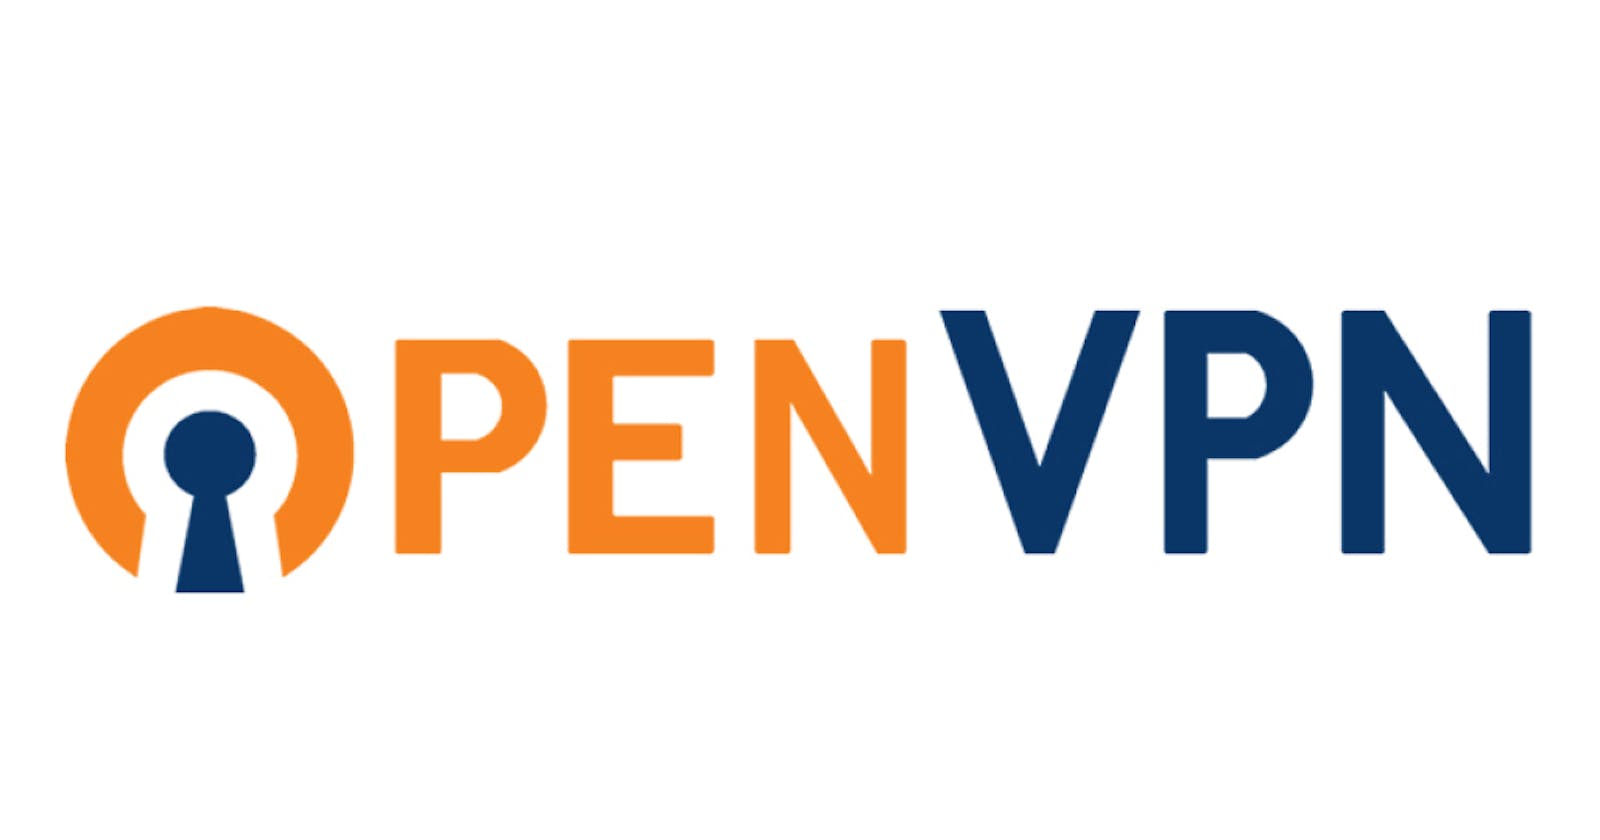 Install &Configure OpenVPN on RHEL/Centos